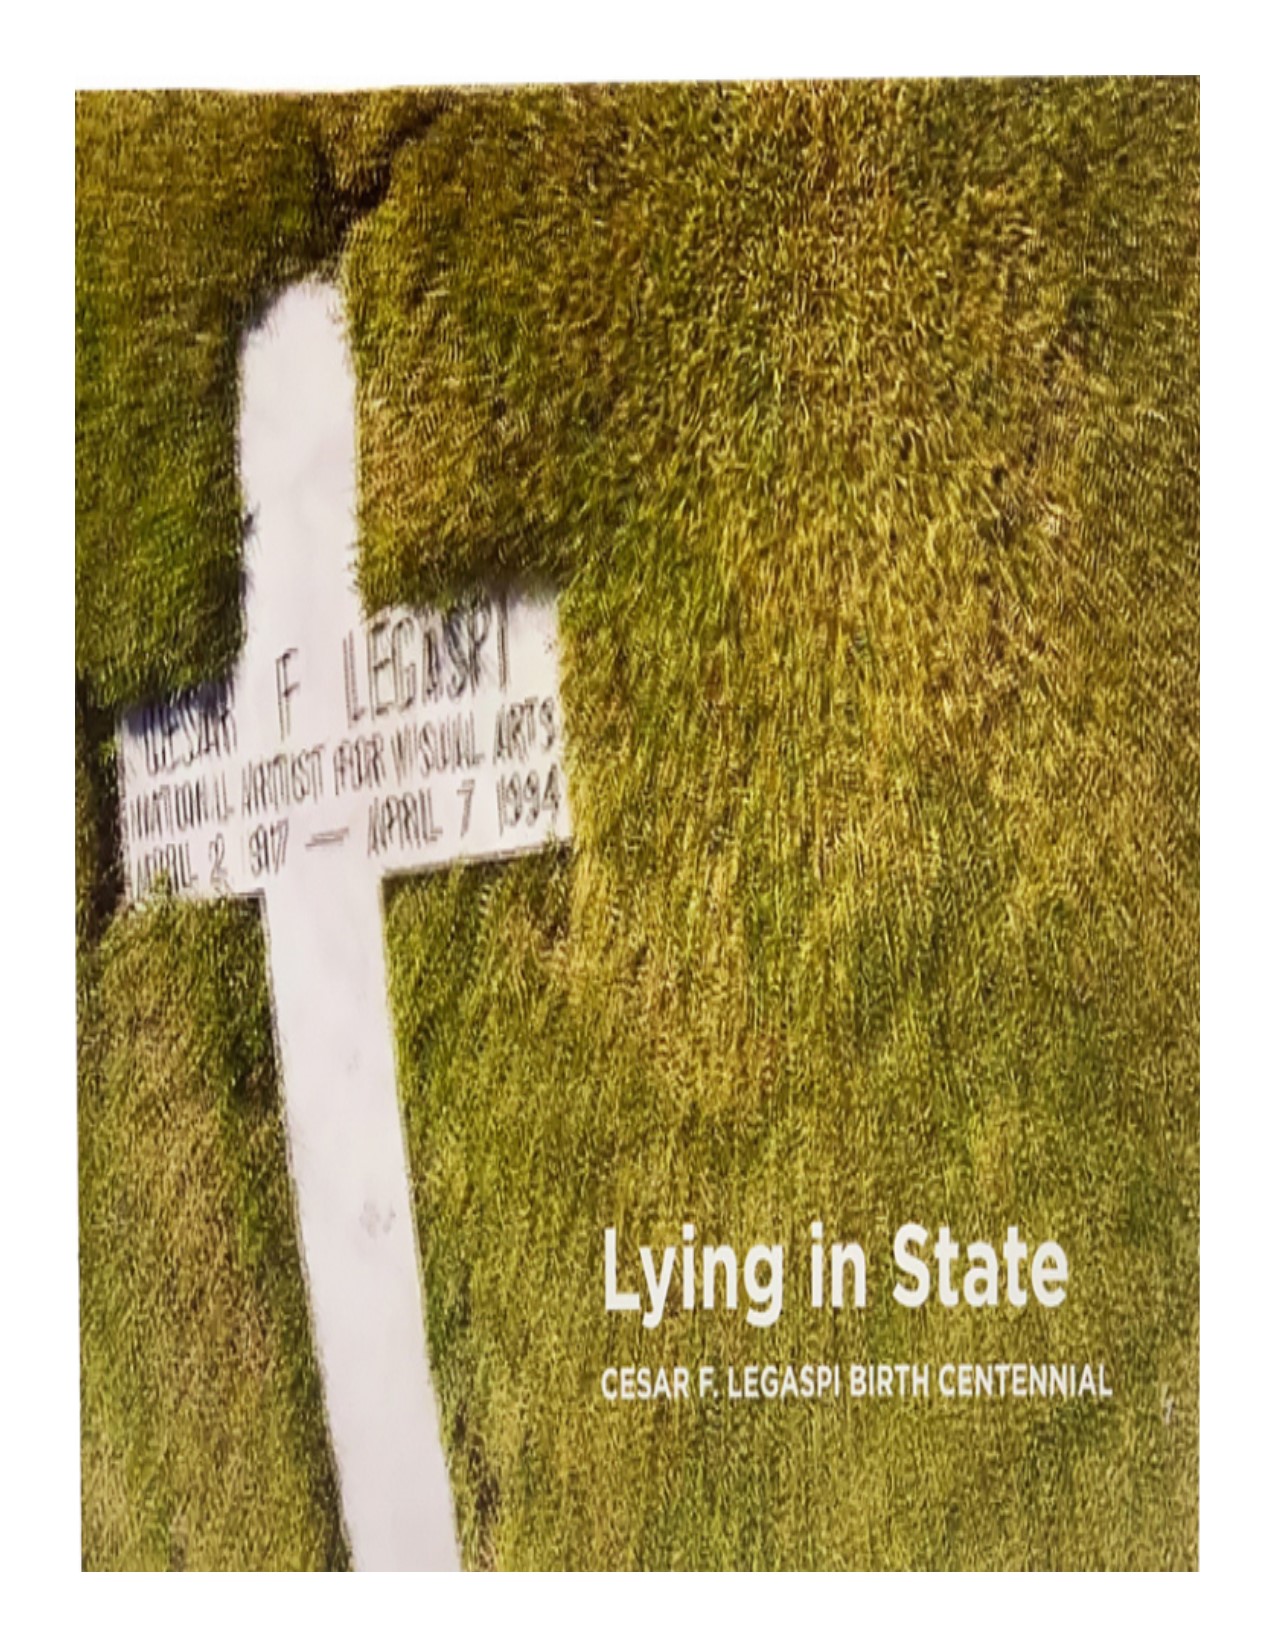 Lying in state Cesar F. Legaspi birth centennial